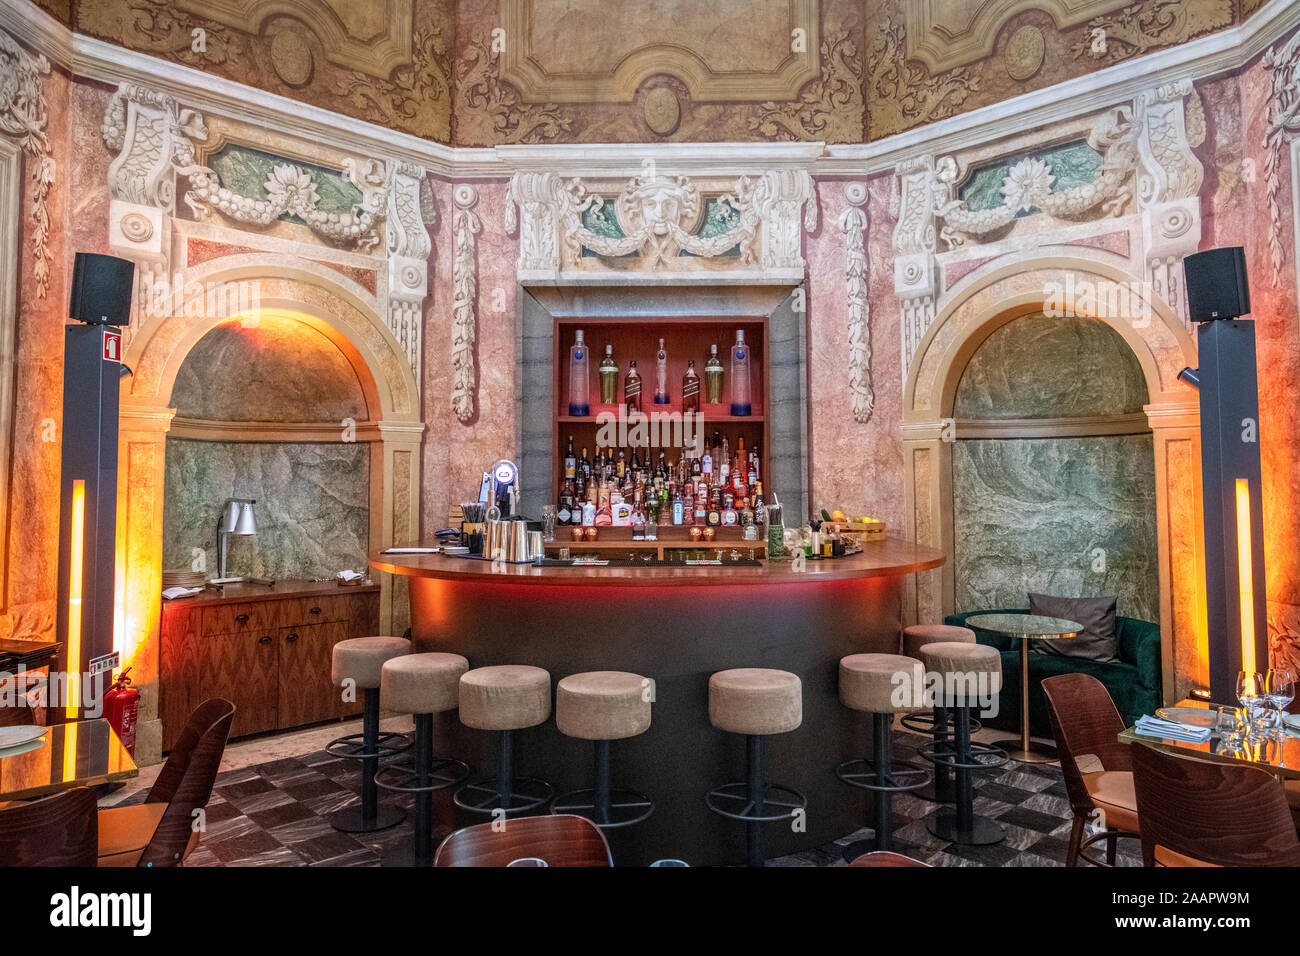 Restaurante chiado palace fotografías e imágenes de alta resolución - Alamy